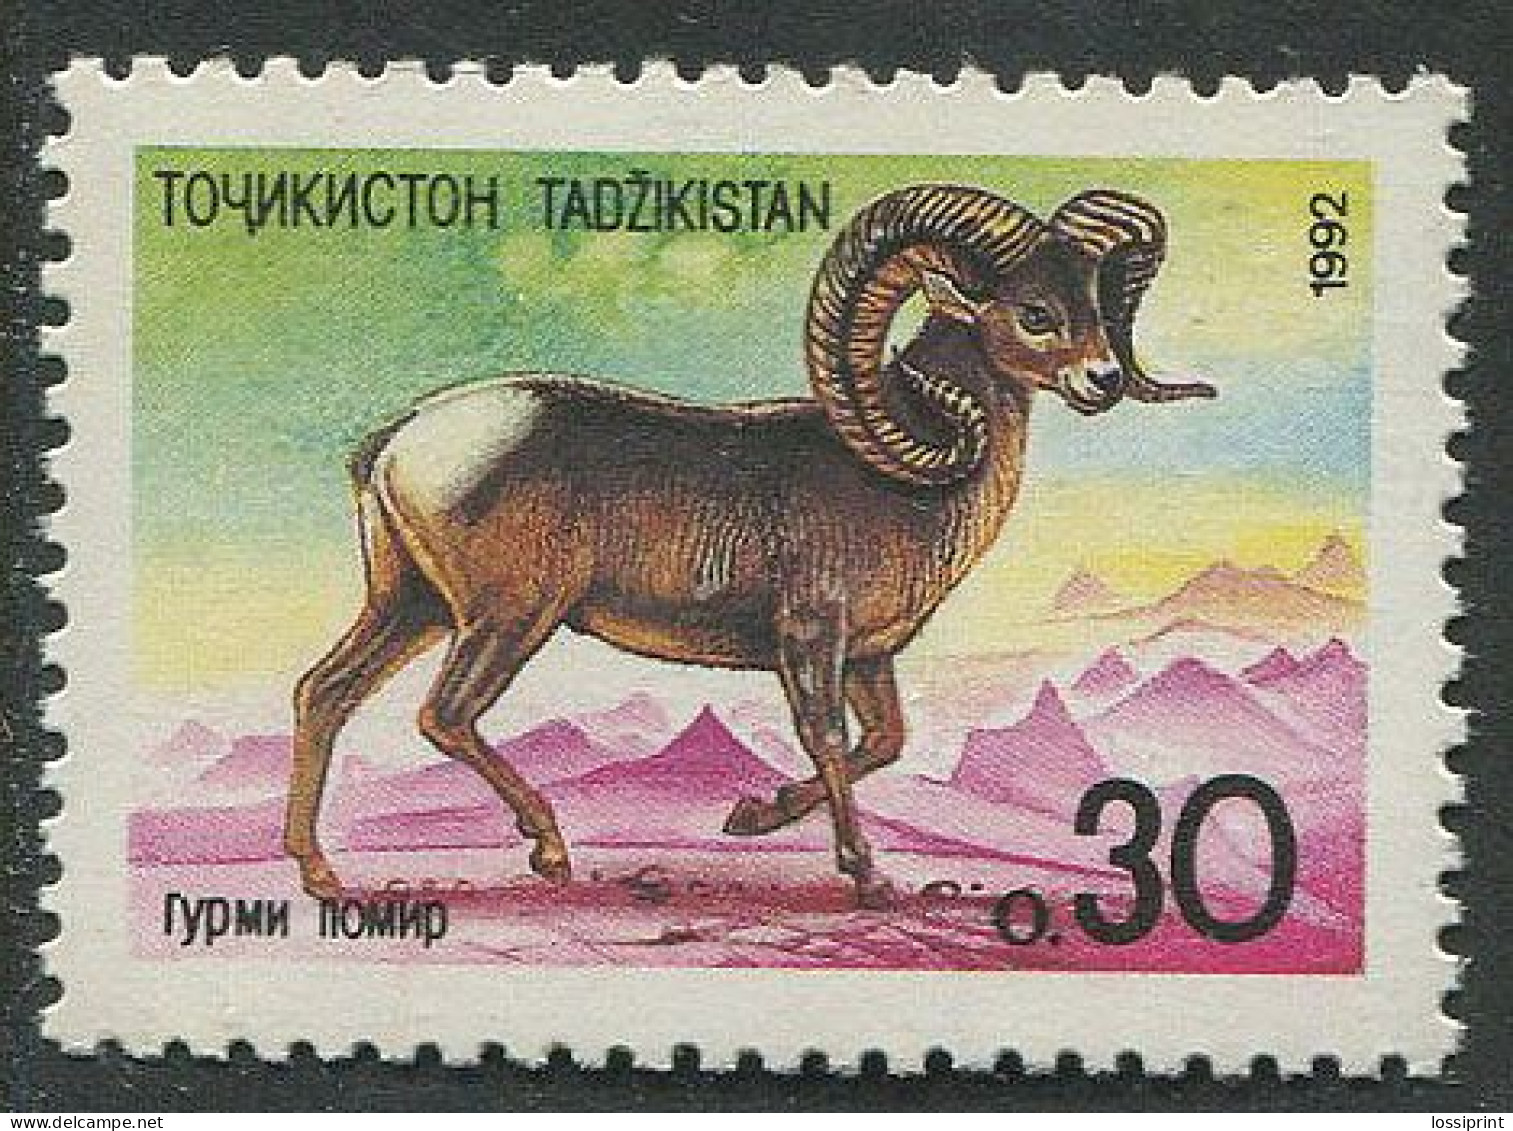 Tajikistan:Unused Stamp Animal, Goat, 1992, MNH - Tadjikistan